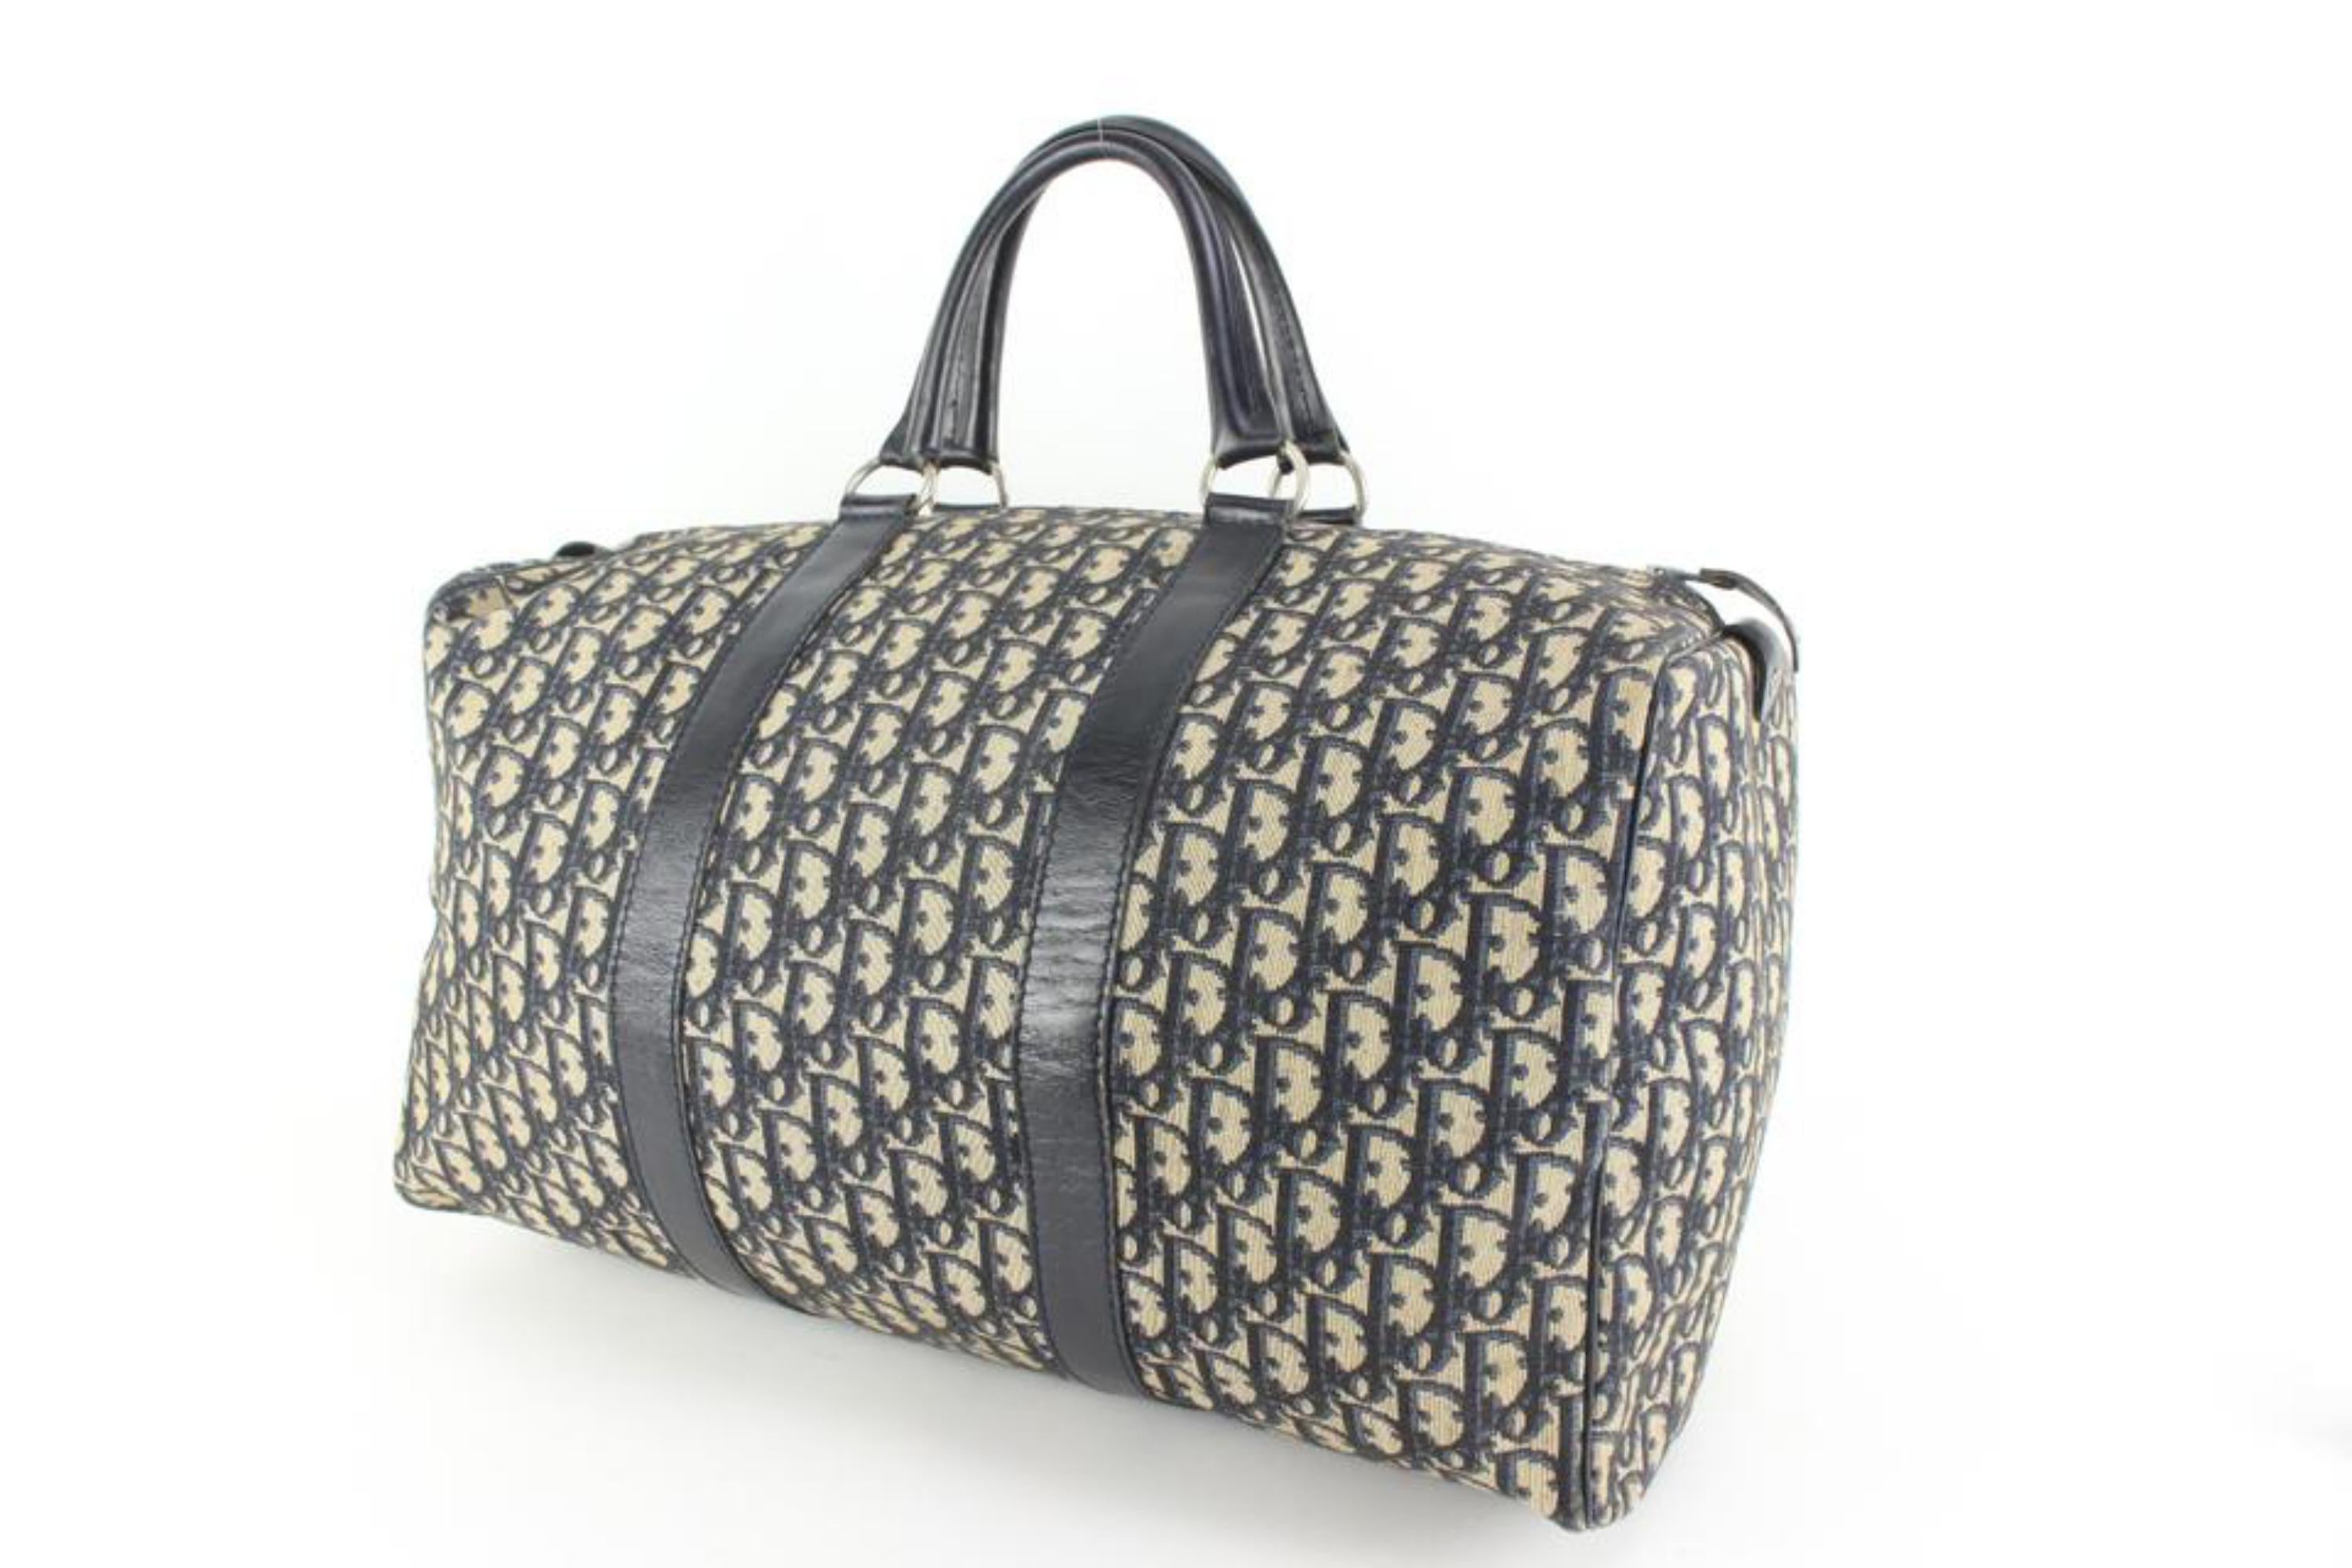 Christian Dior 2020 Oblique Holdall Travel Duffle Bag